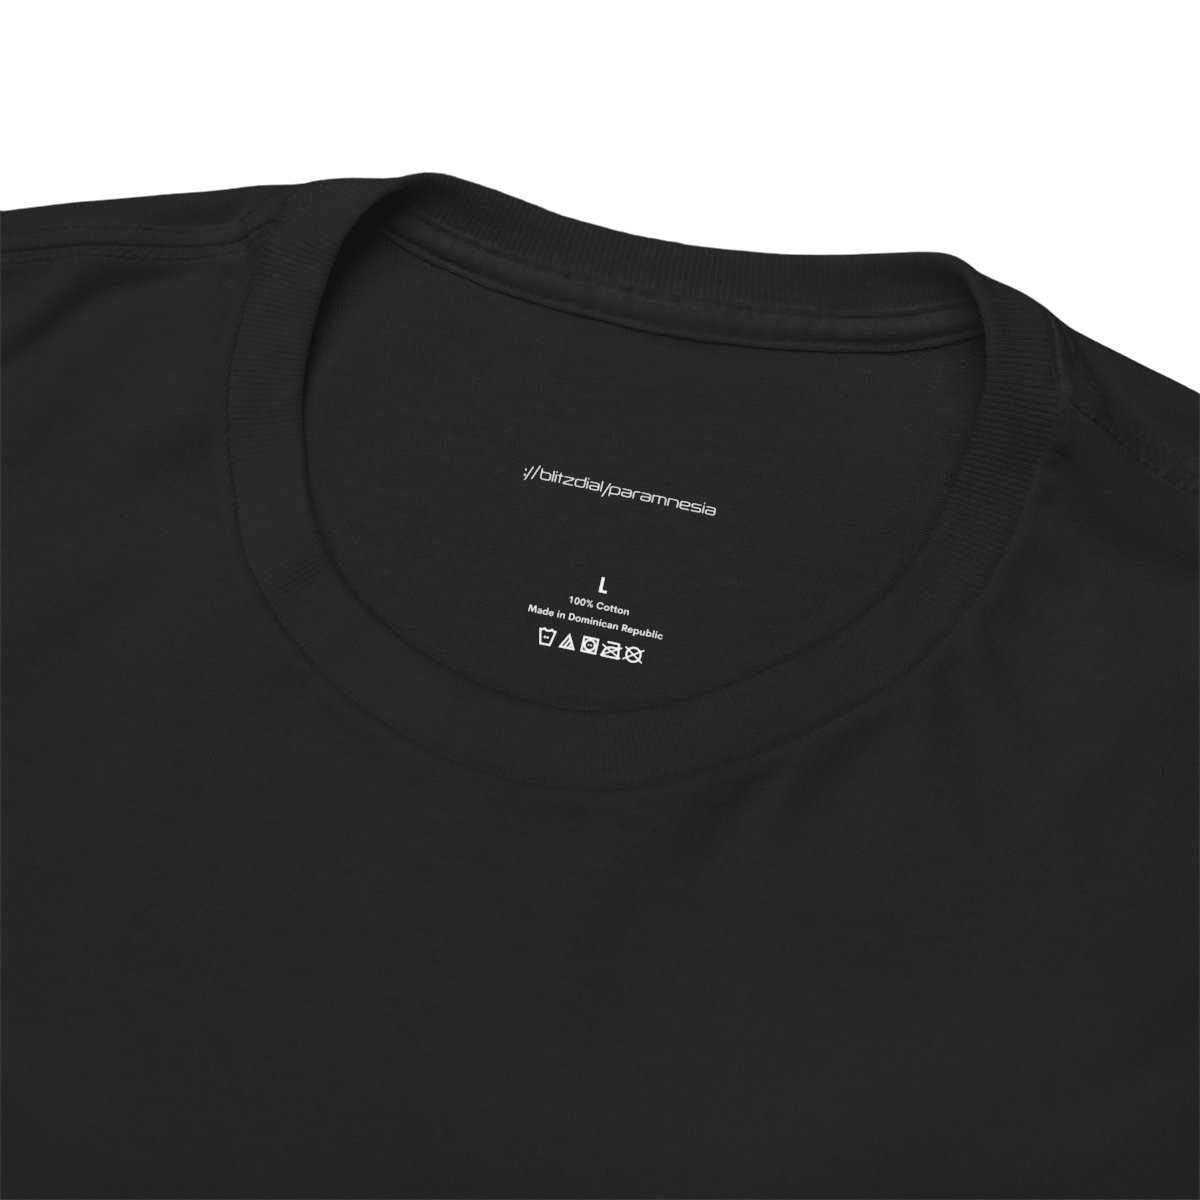 blitzdial - linenoise (black shirt) product thumbnail image